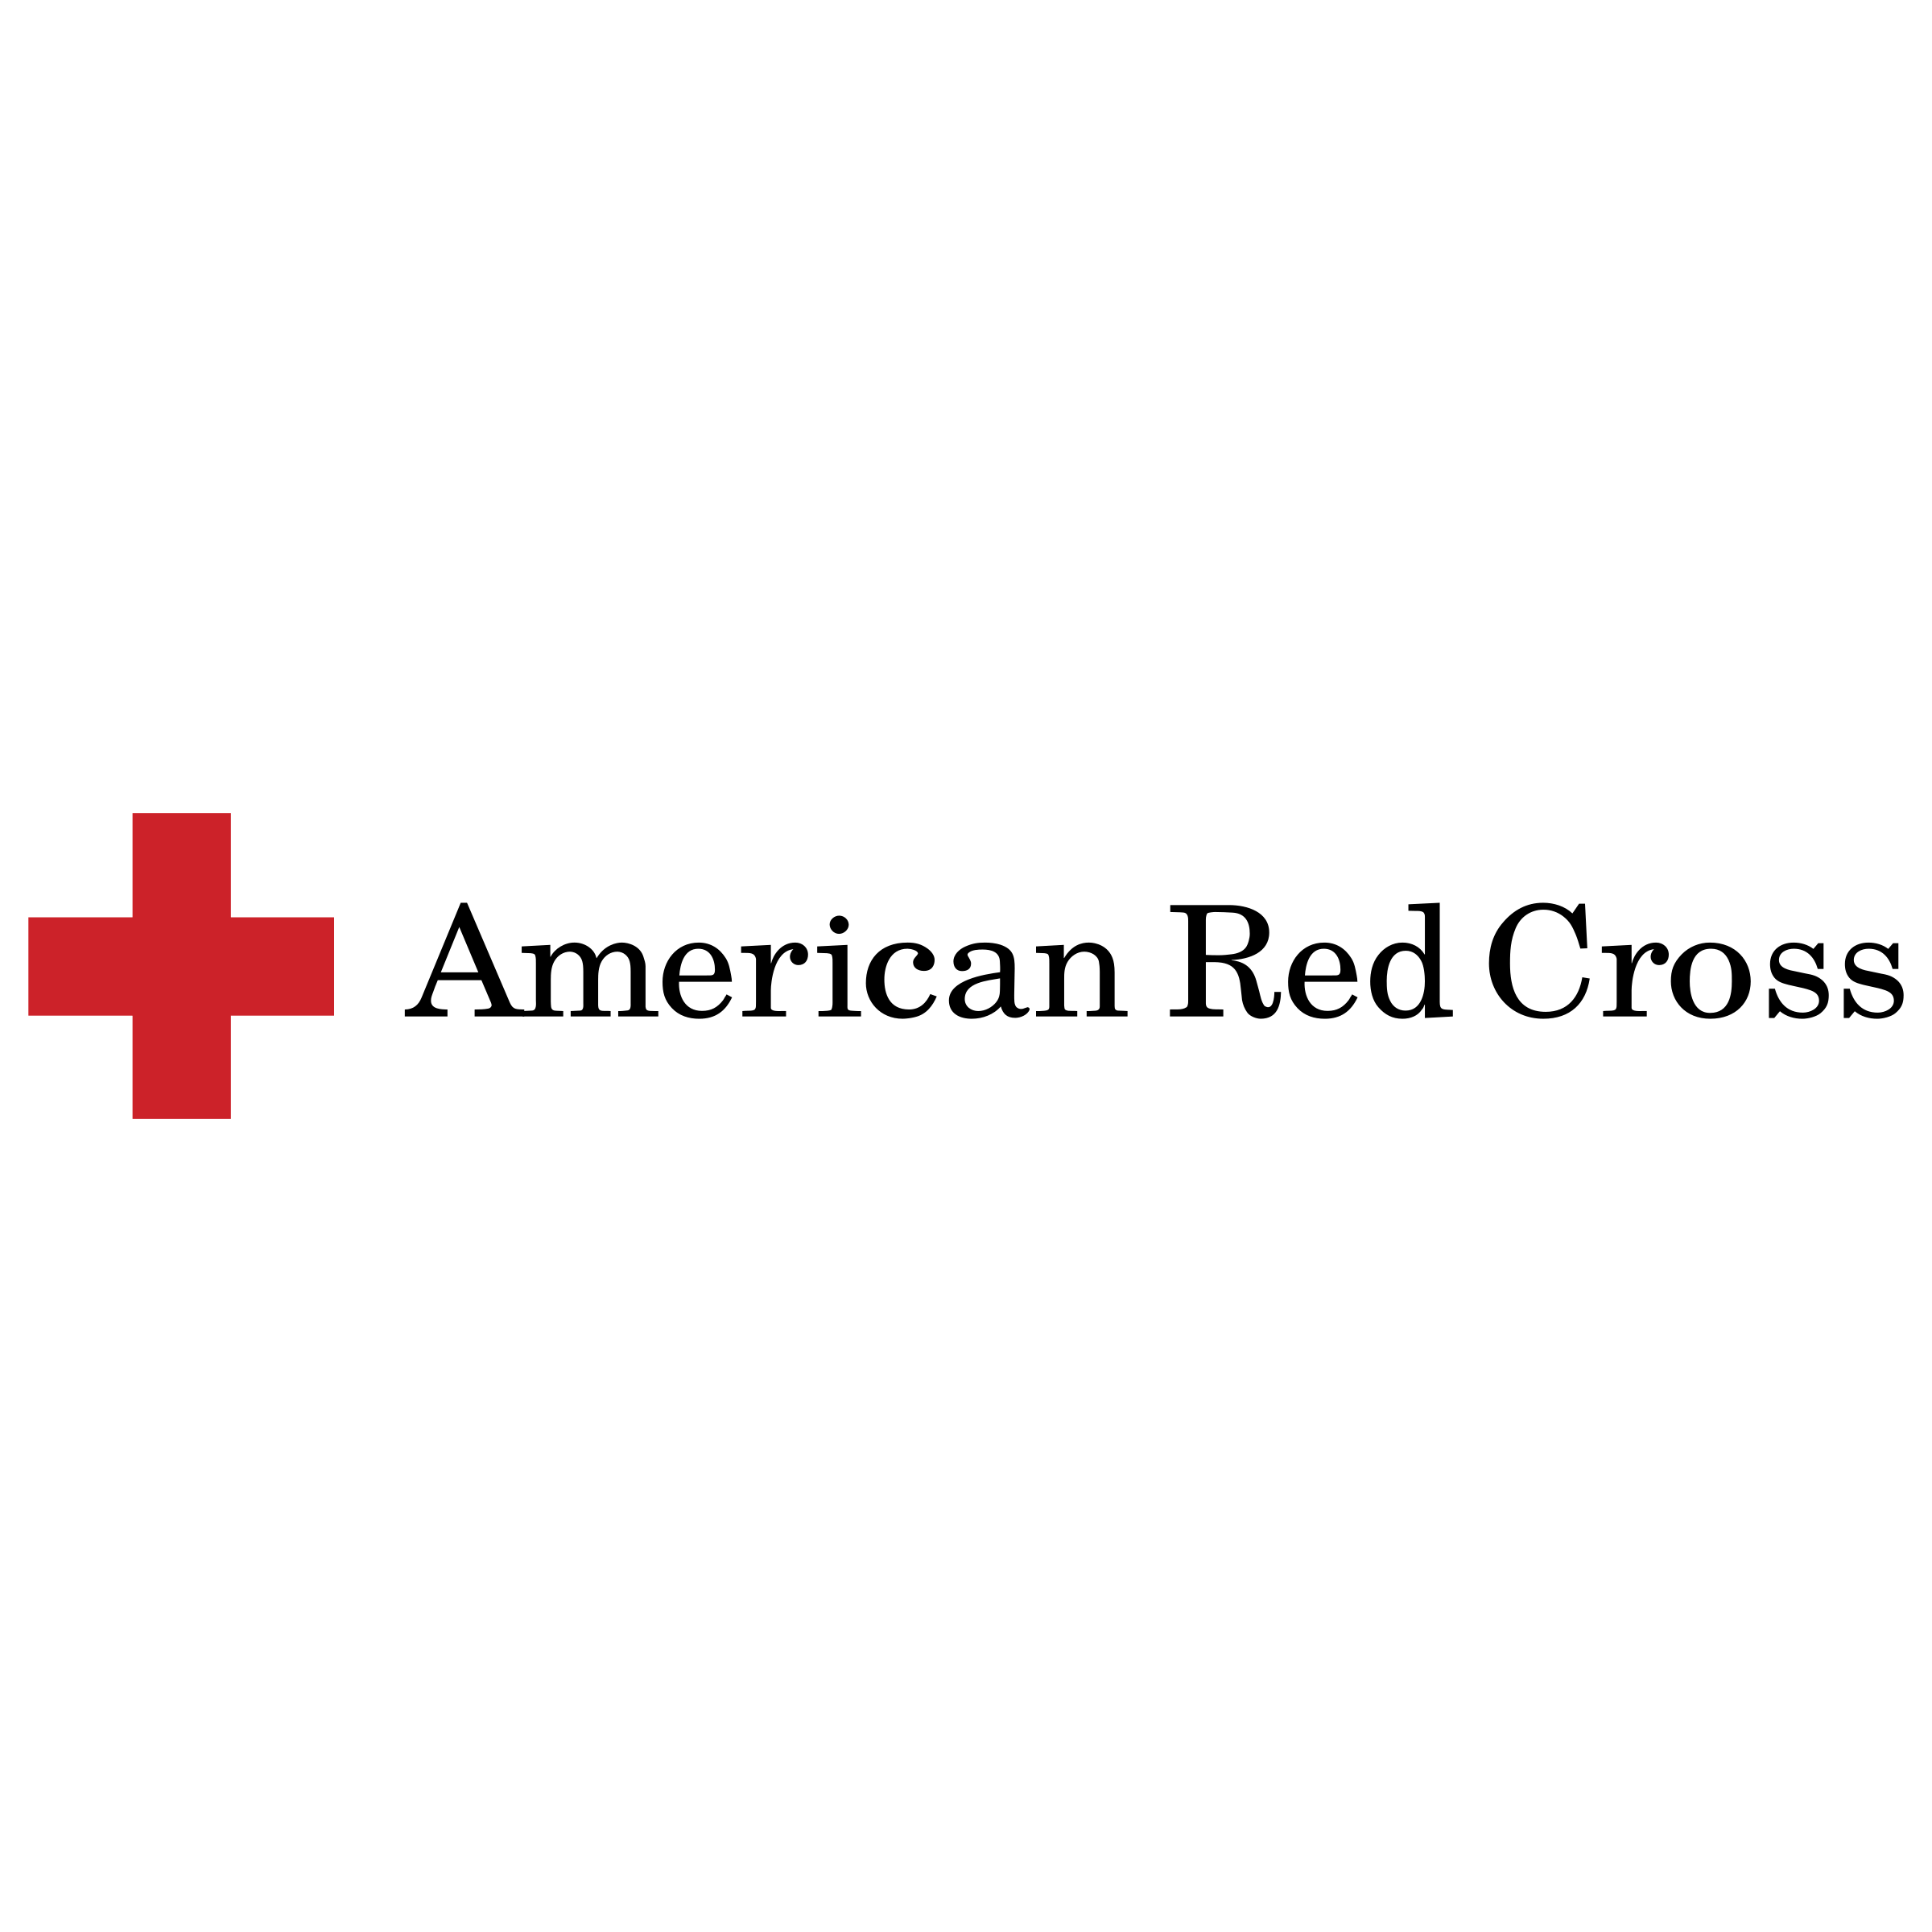 American Red Cross Logo - American Red Cross Logo PNG Transparent & SVG Vector